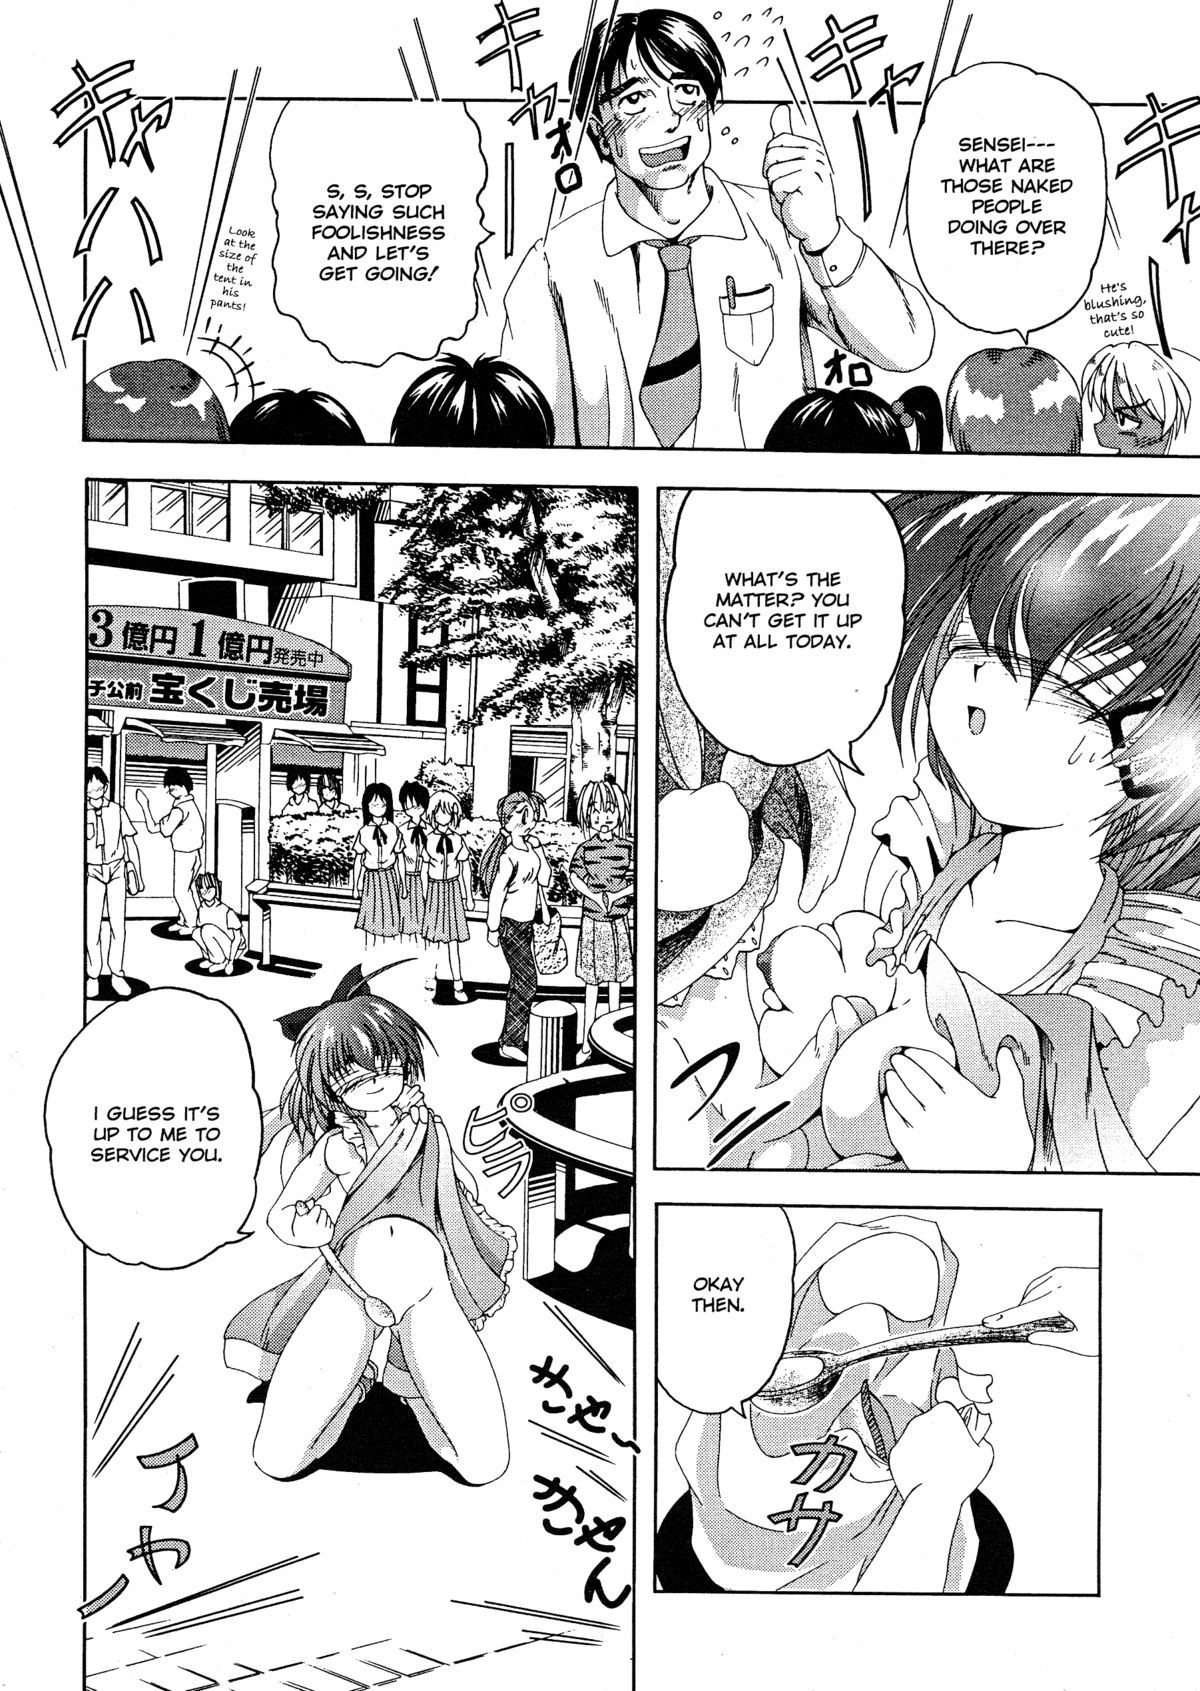 Flashbang!Hi-res 42 hentai manga